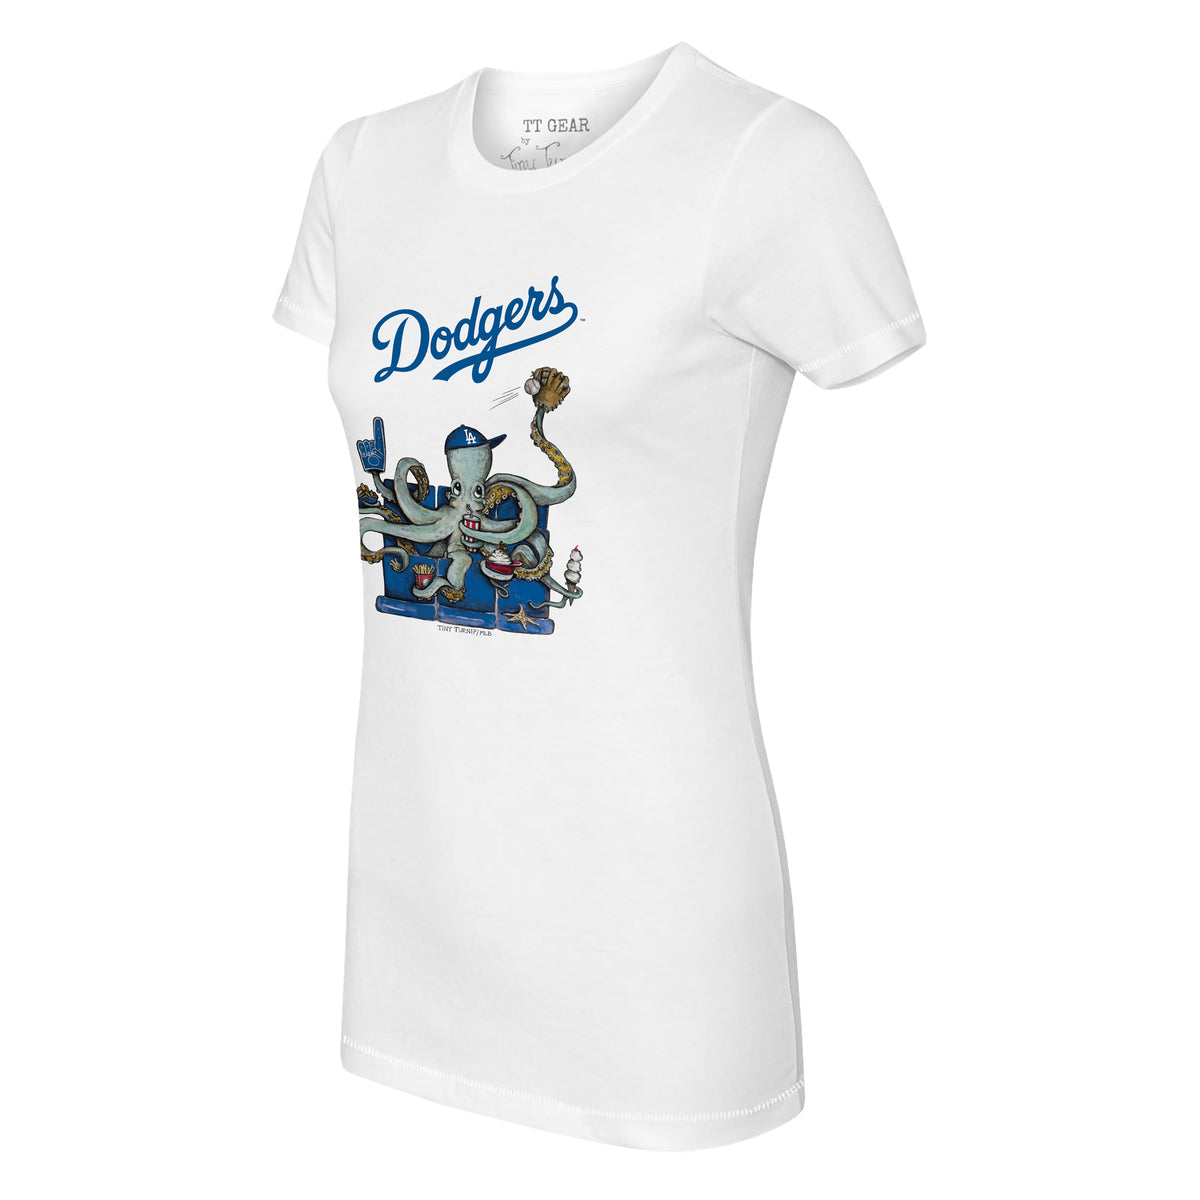 Los Angeles Dodgers Octopus Tee Shirt